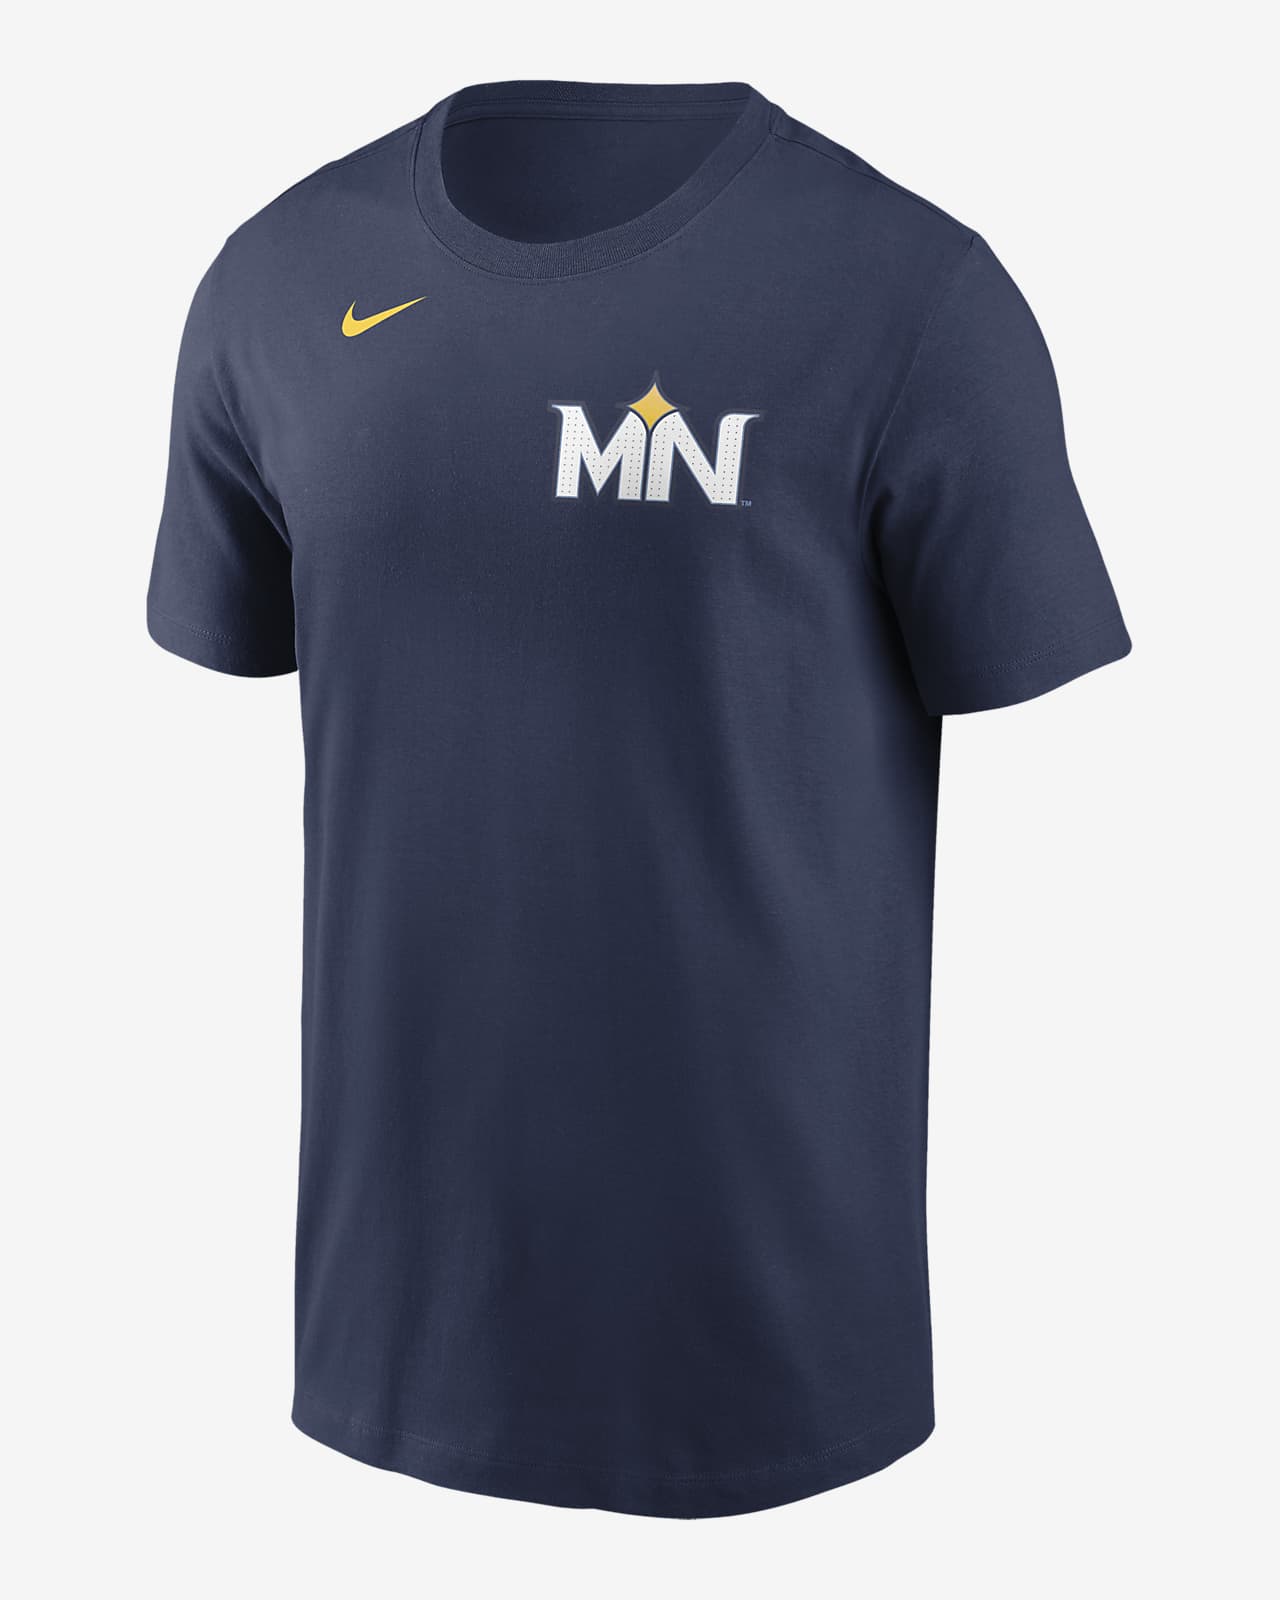 Max Kepler Minnesota Twins City Connect Fuse Men's Nike MLB T-Shirt